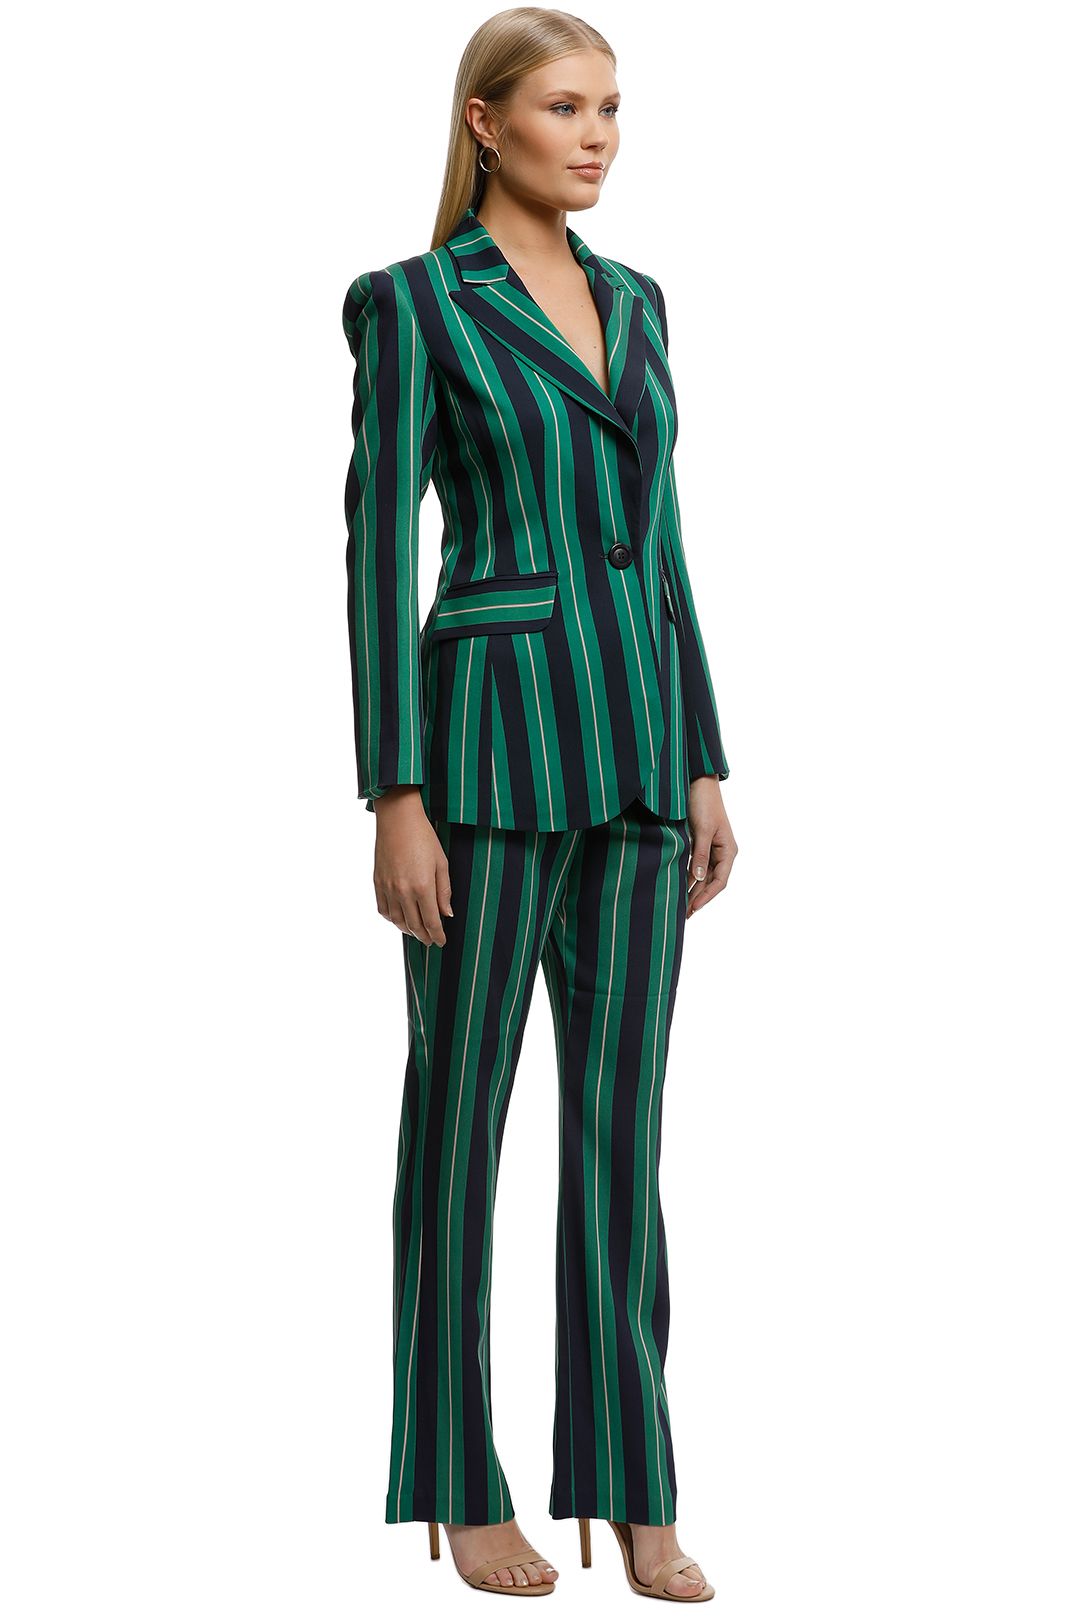 Moss-and-Spy-Gatsby-Blazer-and-Pant-Set-Green-Stripe-Side